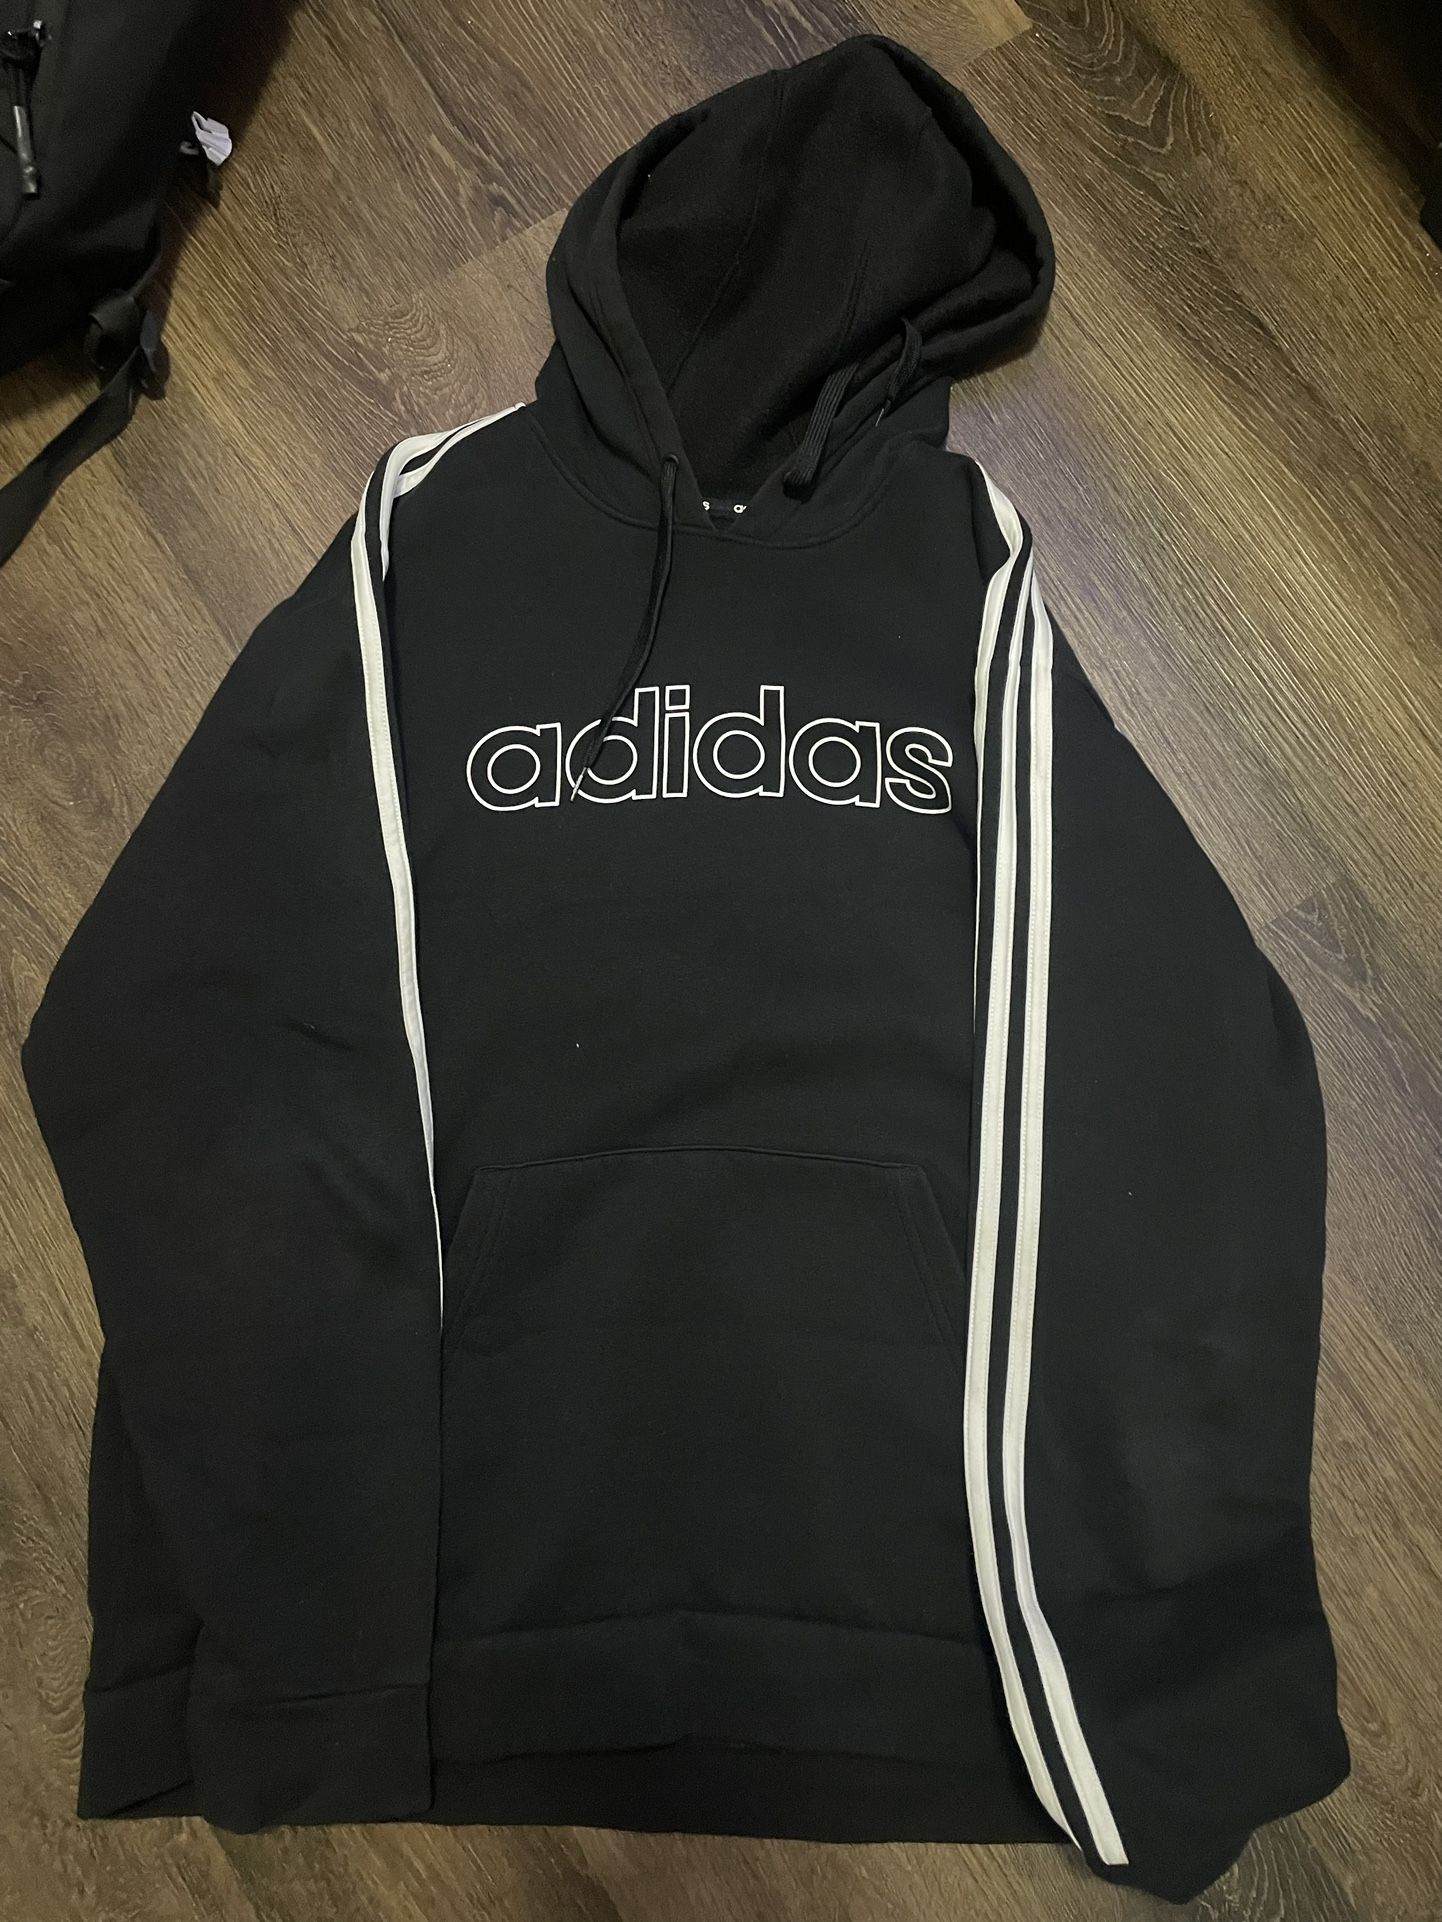 Adidas stripe hoodie size M